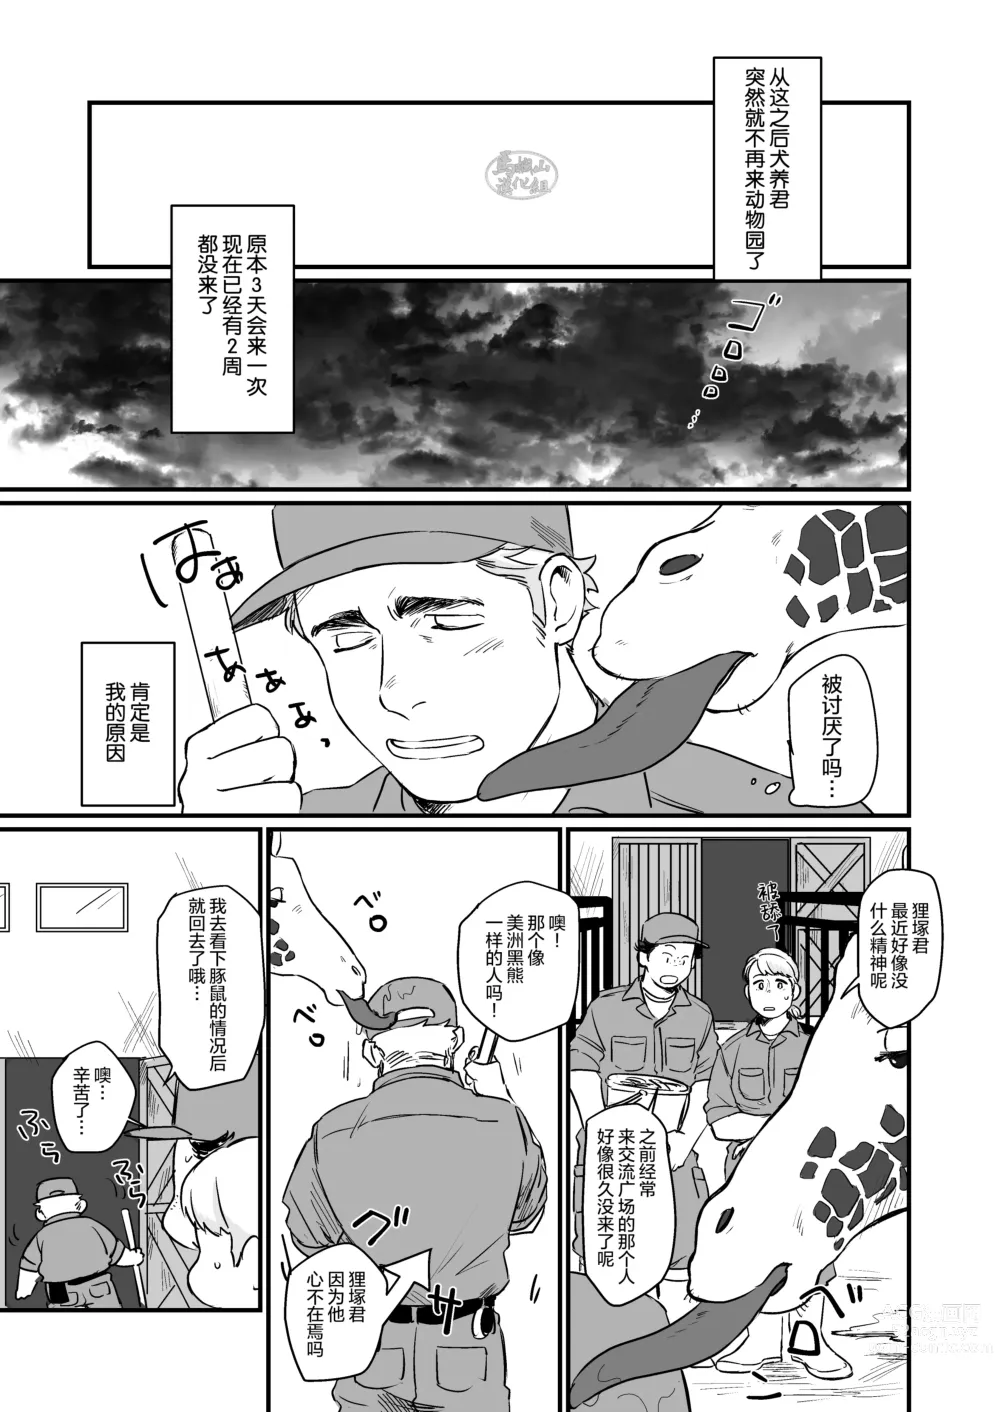 Page 9 of manga ビースティコンプレックス.动物狂想曲